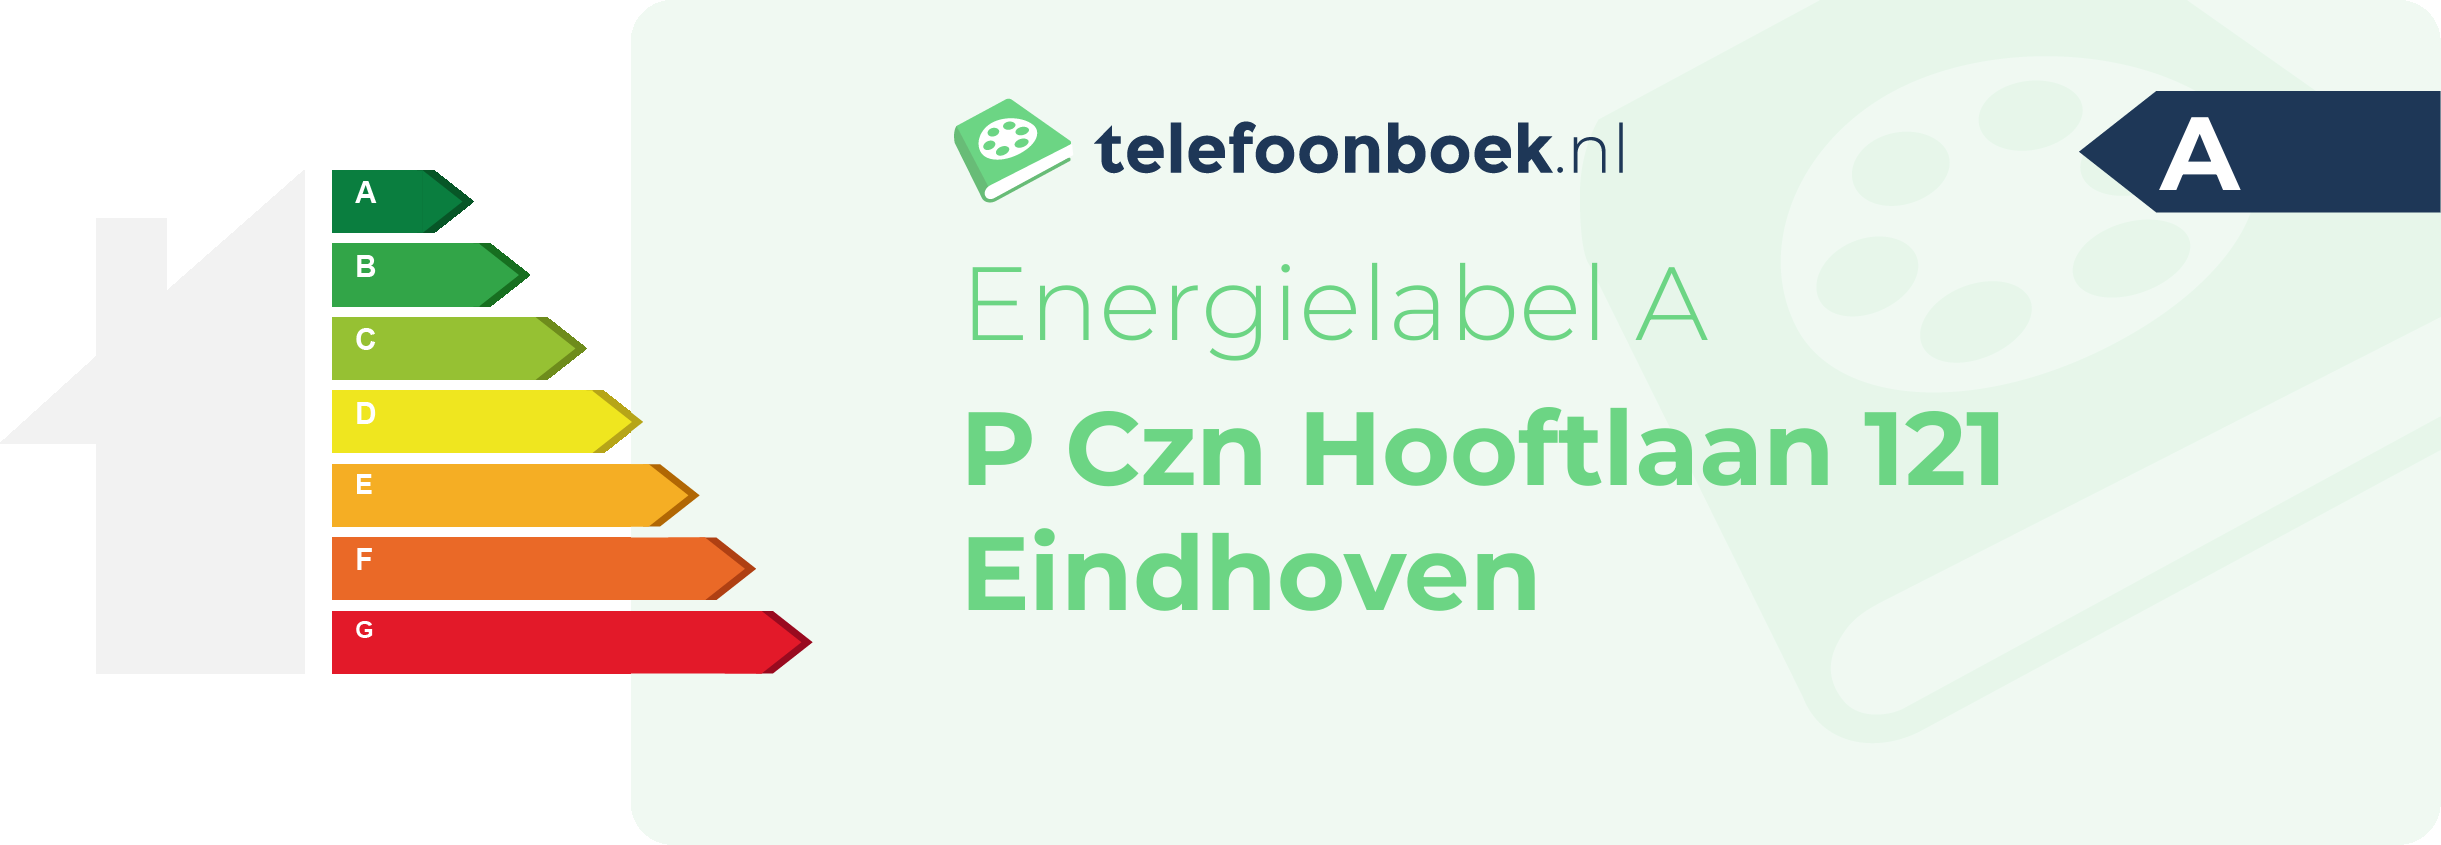 Energielabel P Czn Hooftlaan 121 Eindhoven